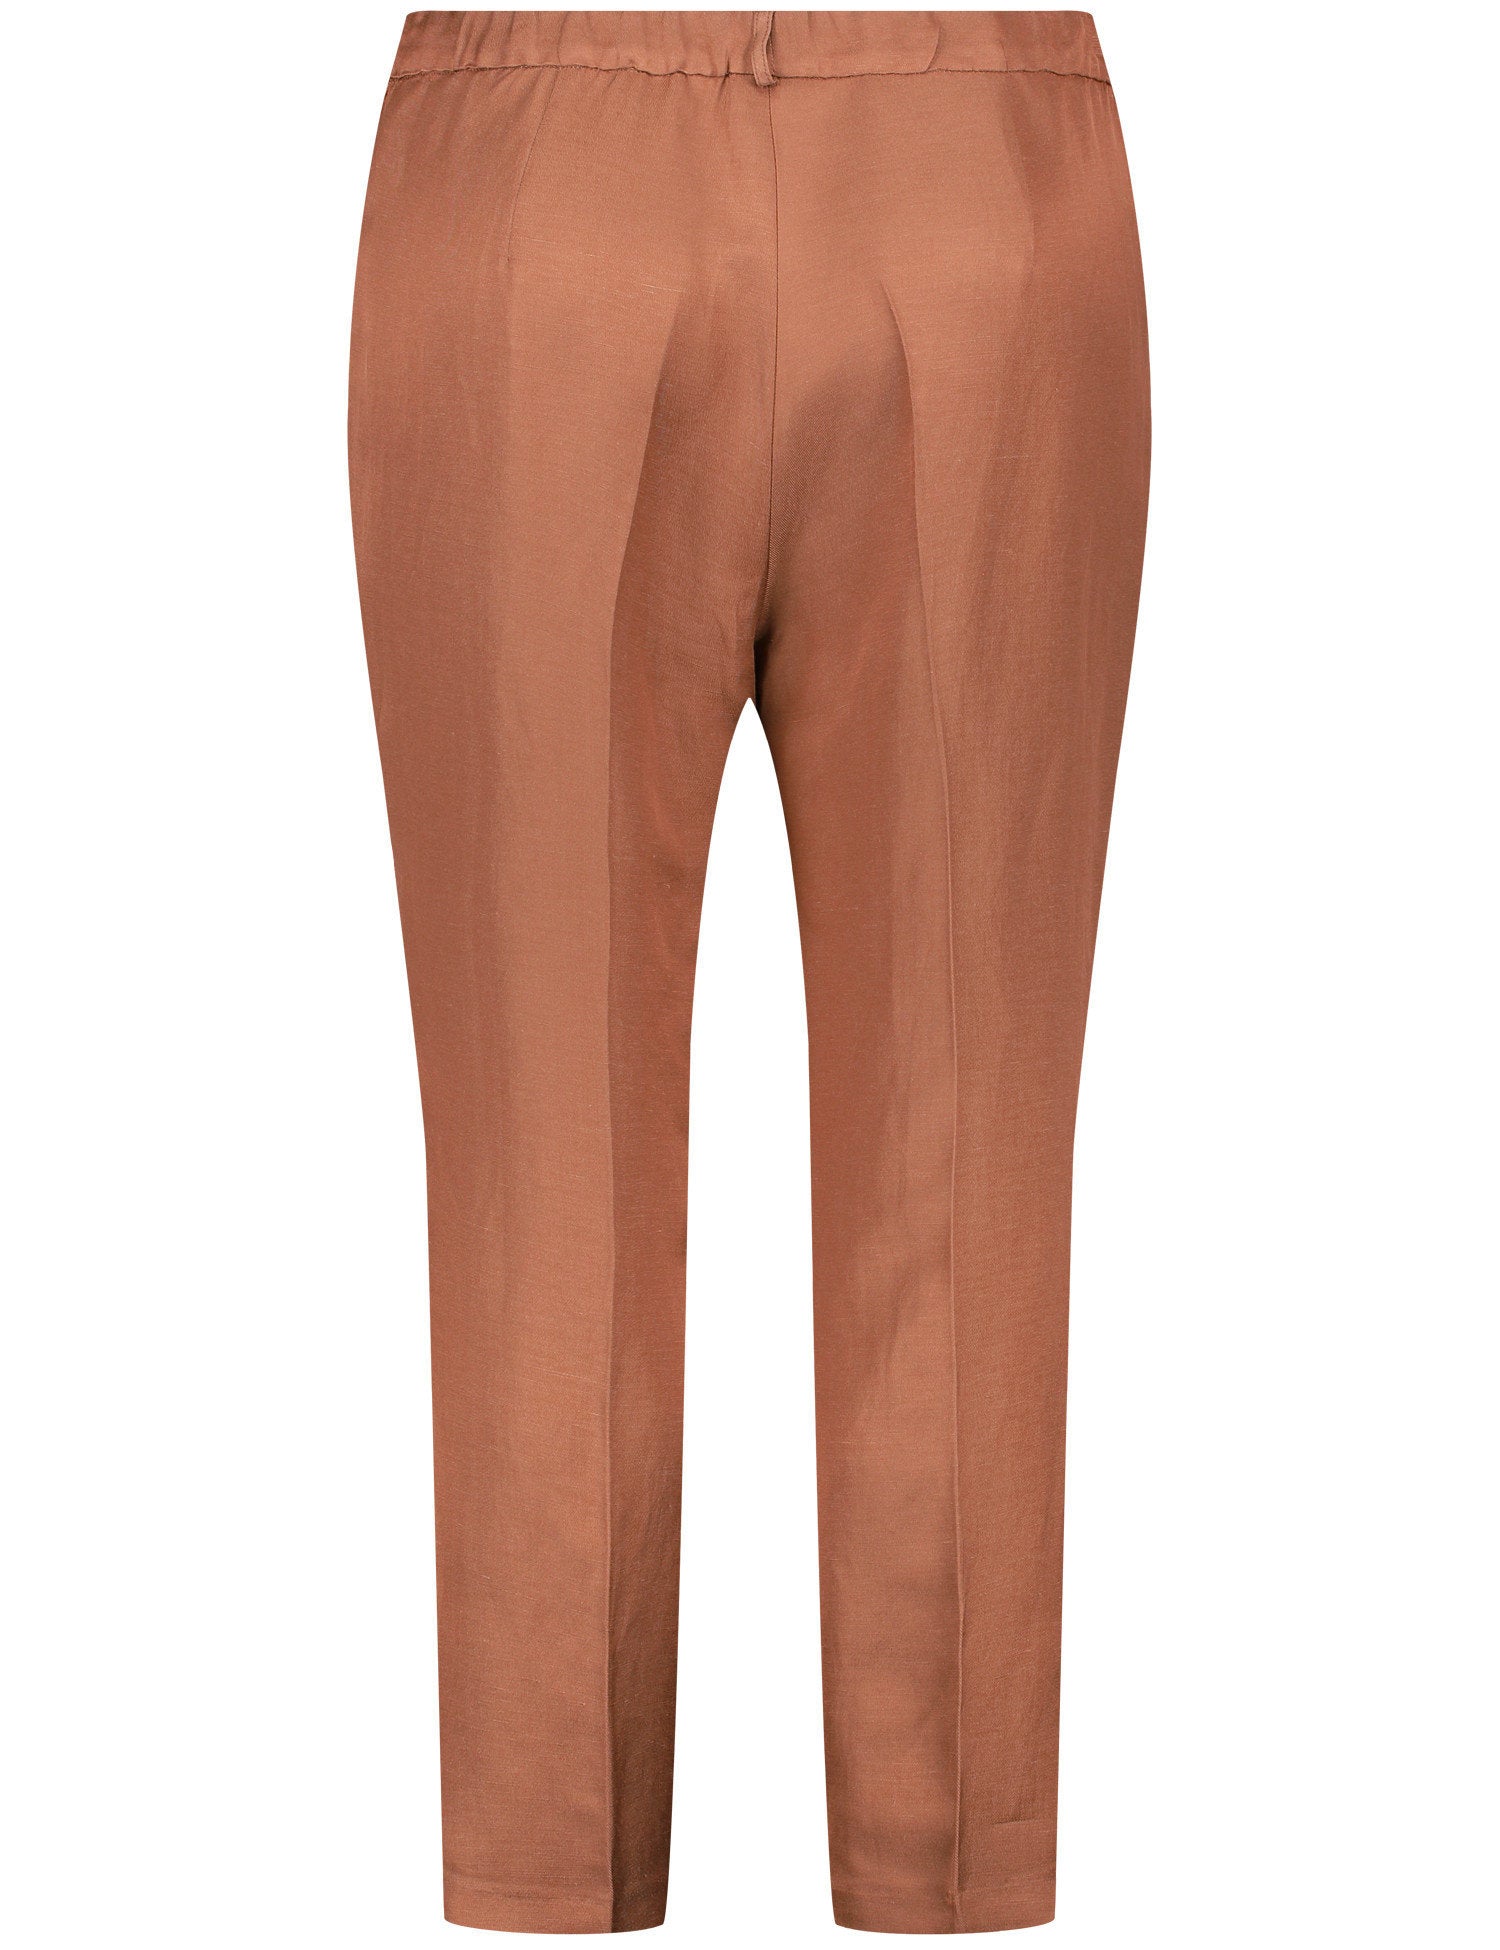 7/8 Length Linen Blend Trousers, Greta_320205-21302_7360_02